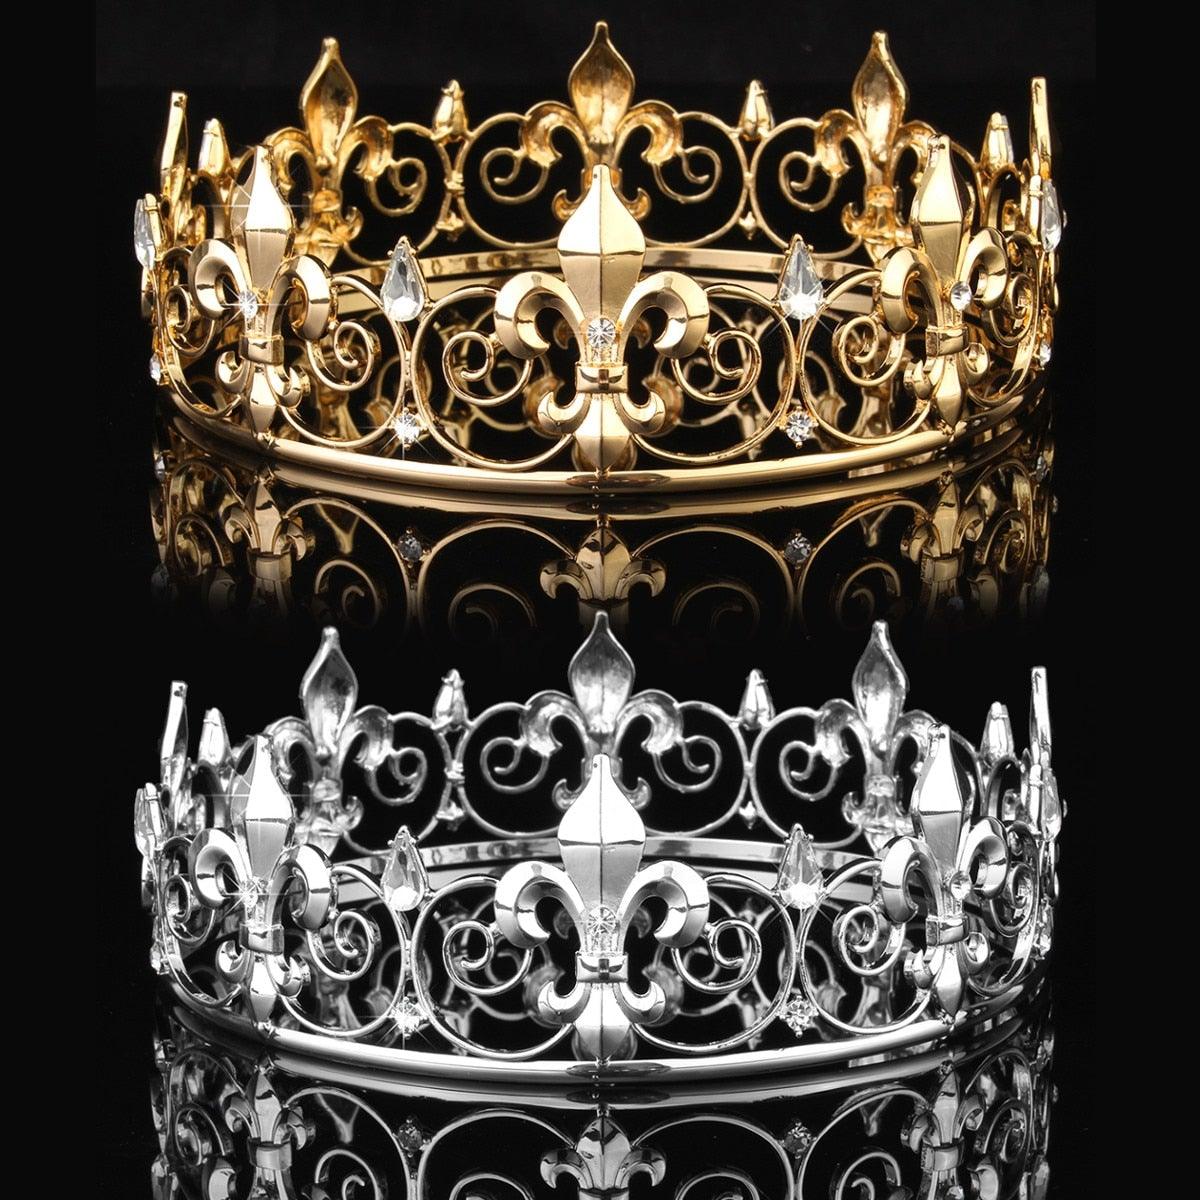  Rhinestone Wedding Crown - VeilsGalore 